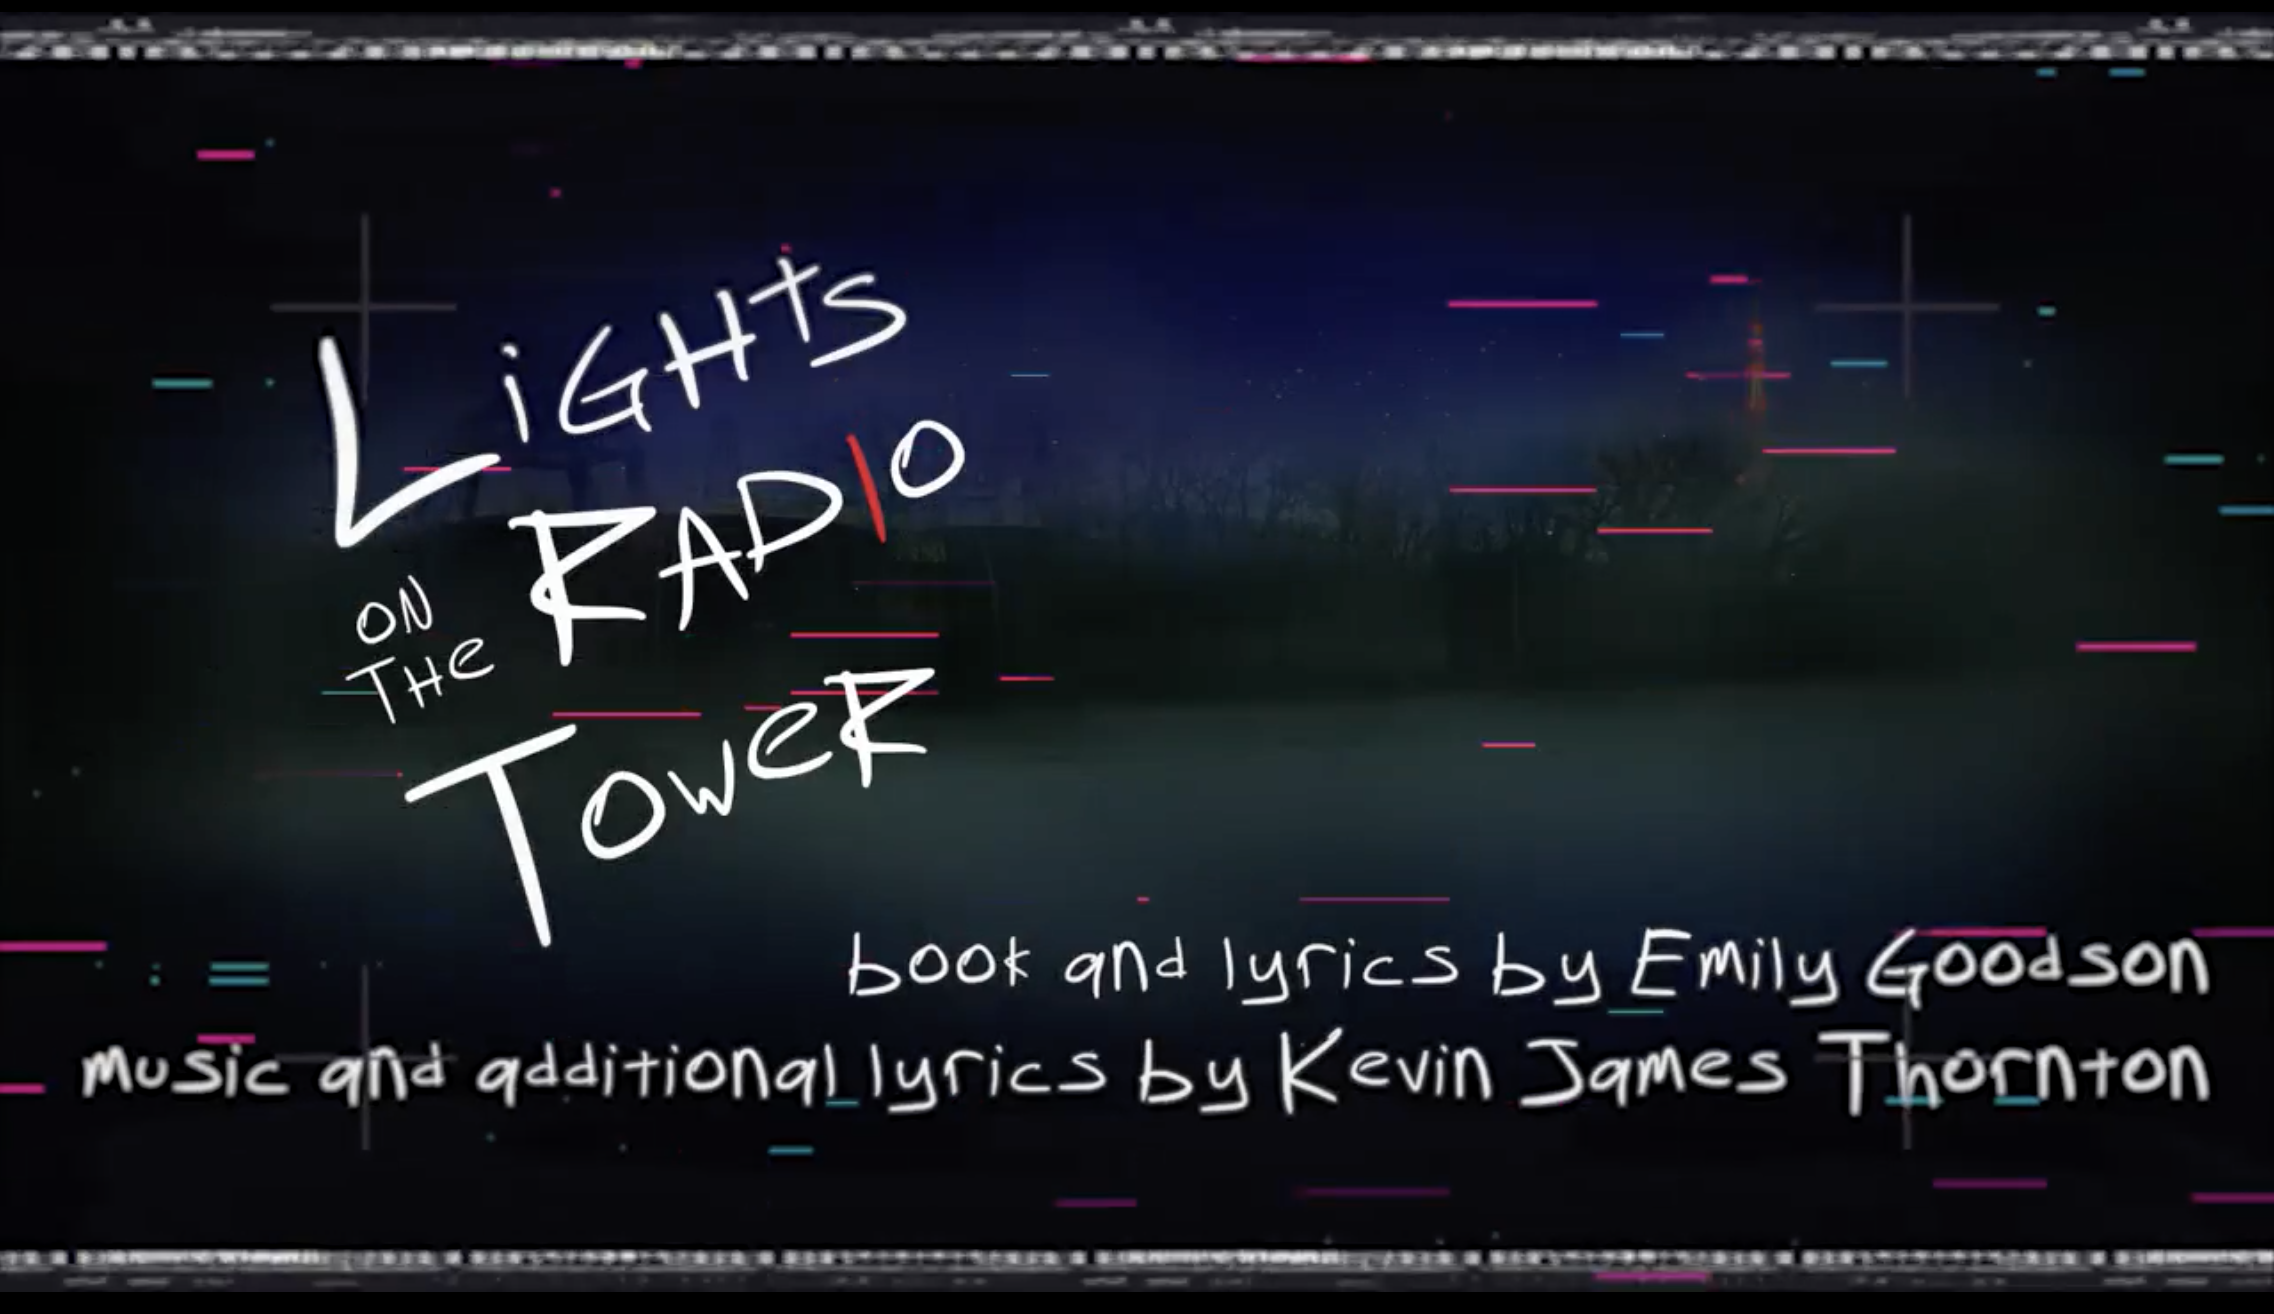 Lights on the Radio Tower